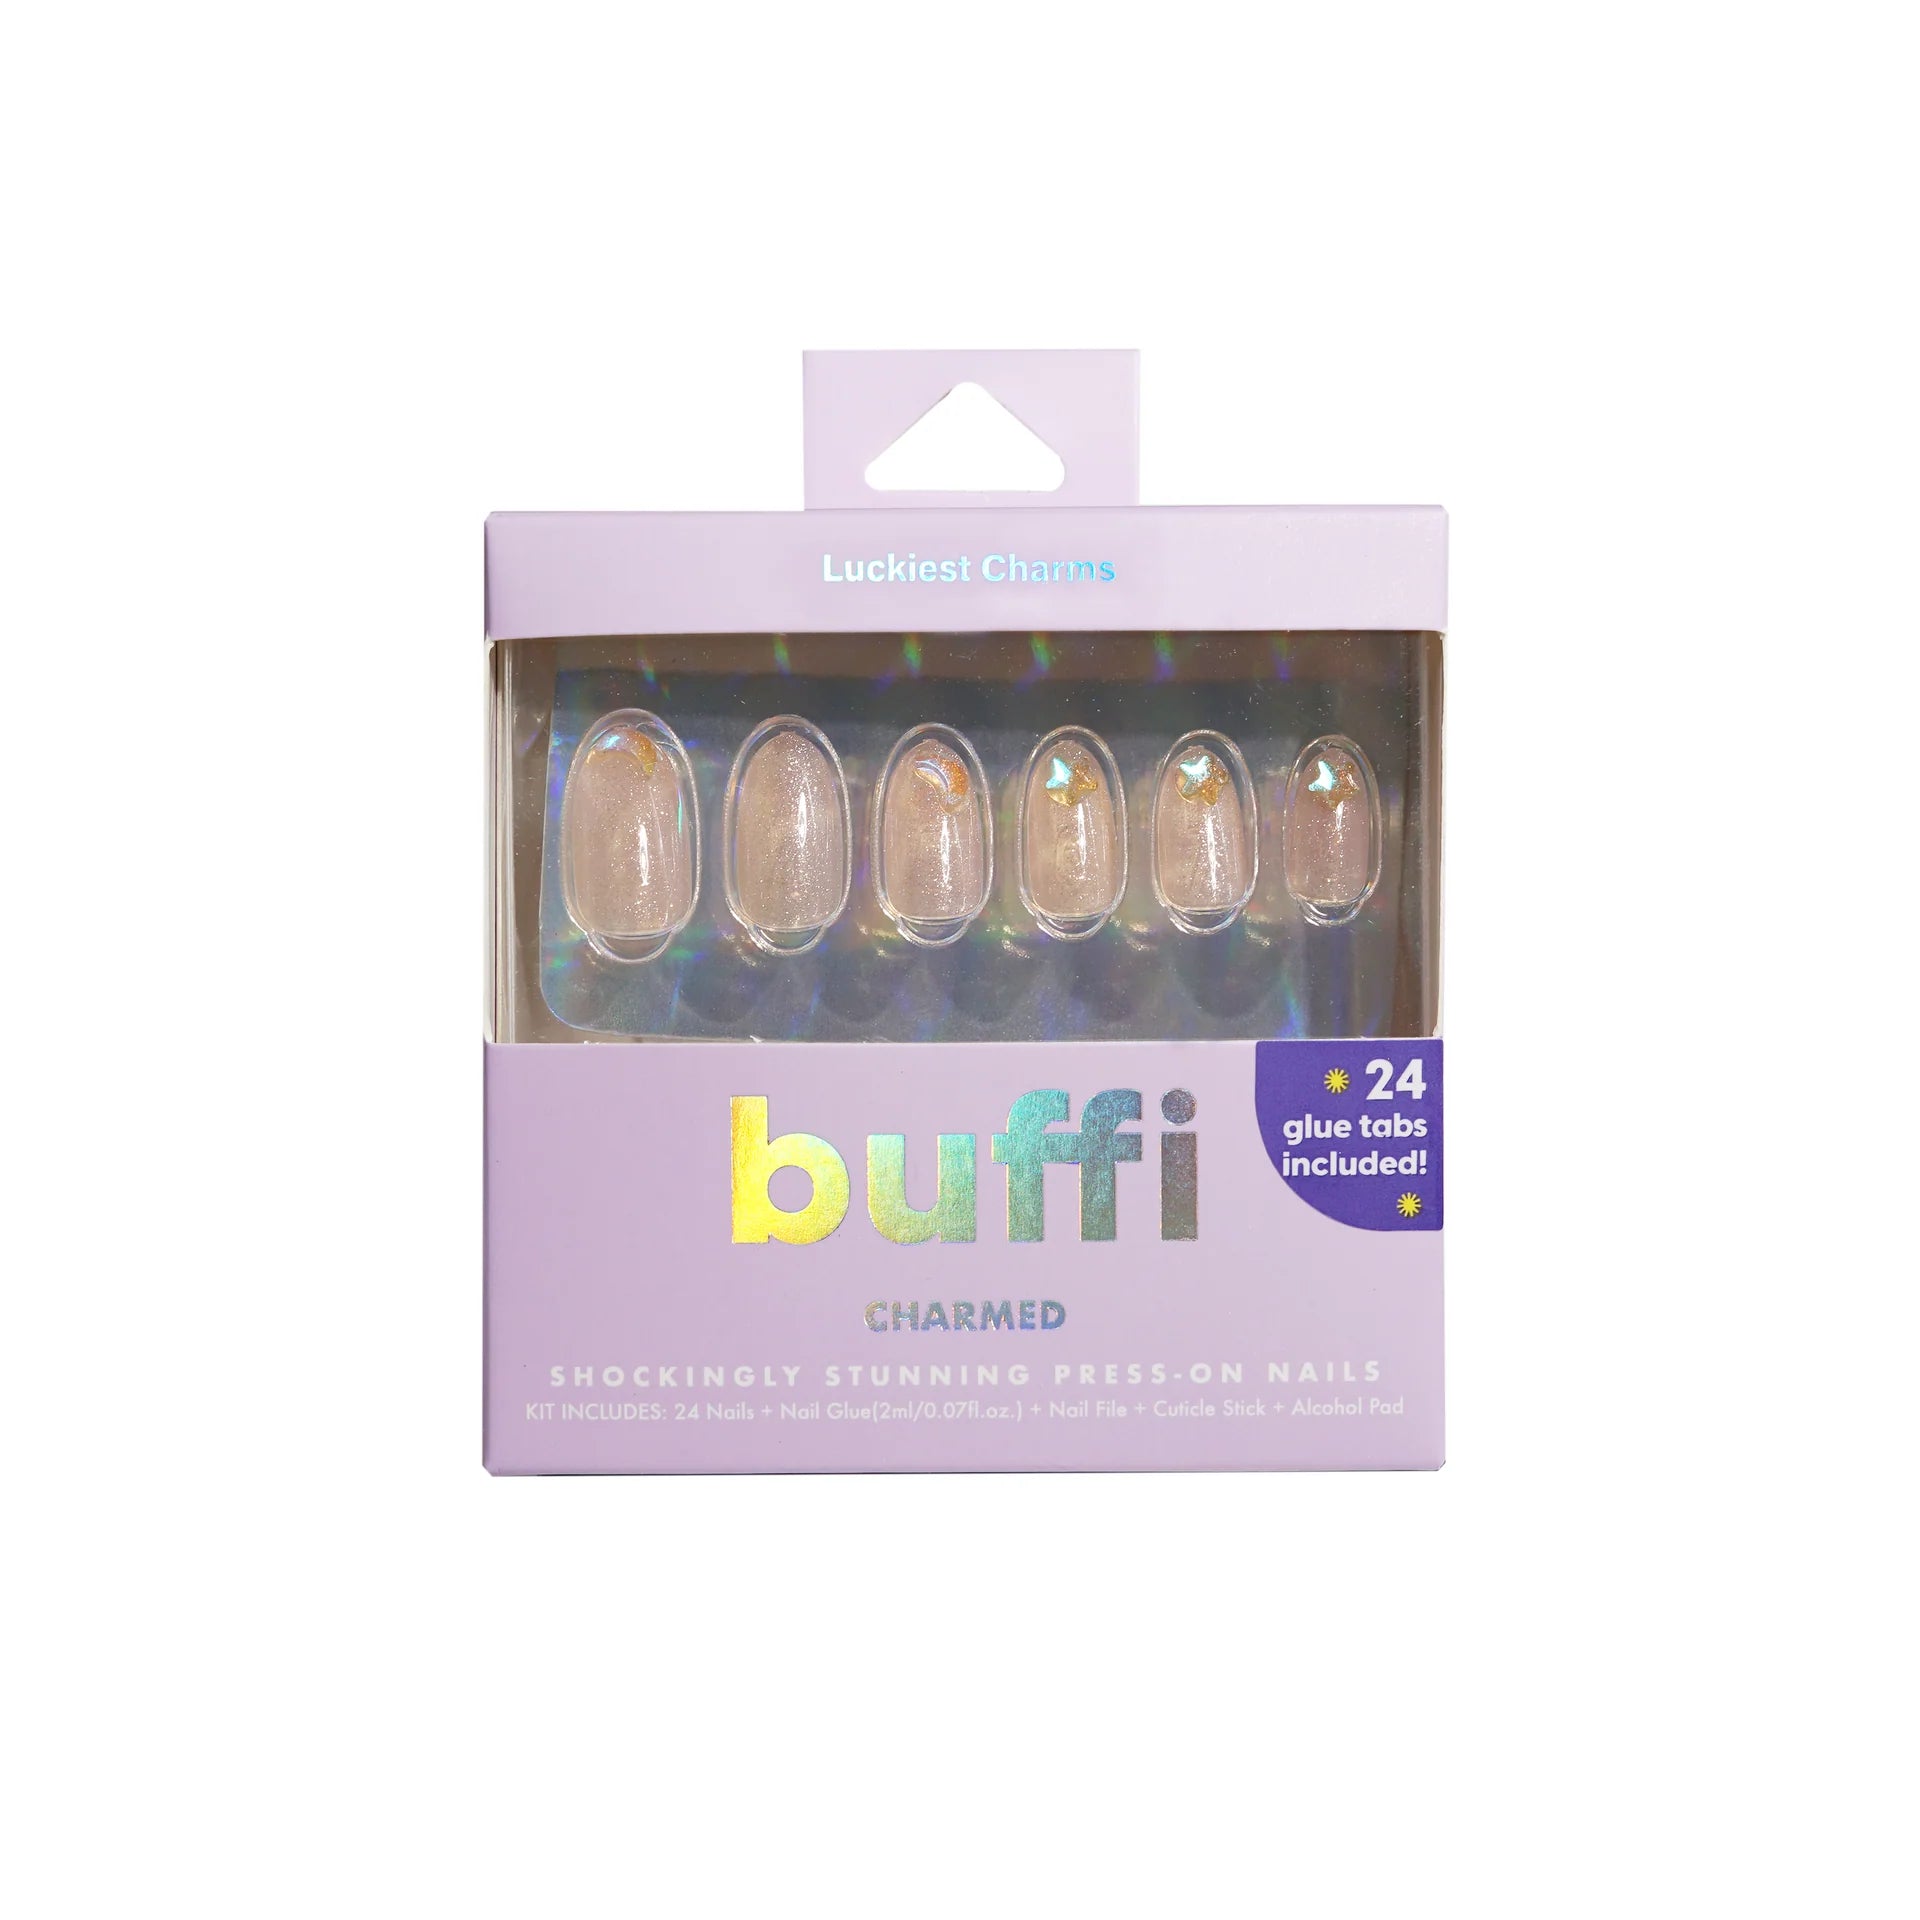 Kara Beauty - Buffi Press On Nails Luckiest Charms